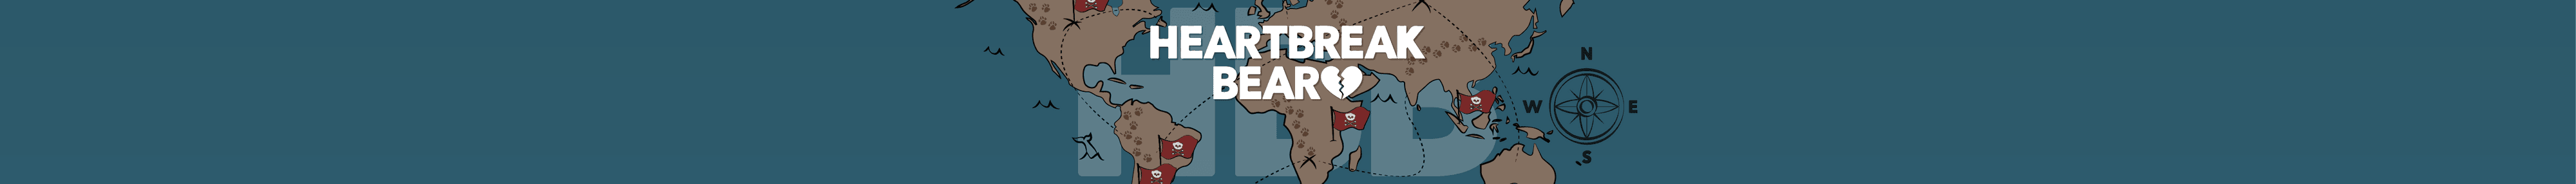 Heartbreak_Bear_Official banner